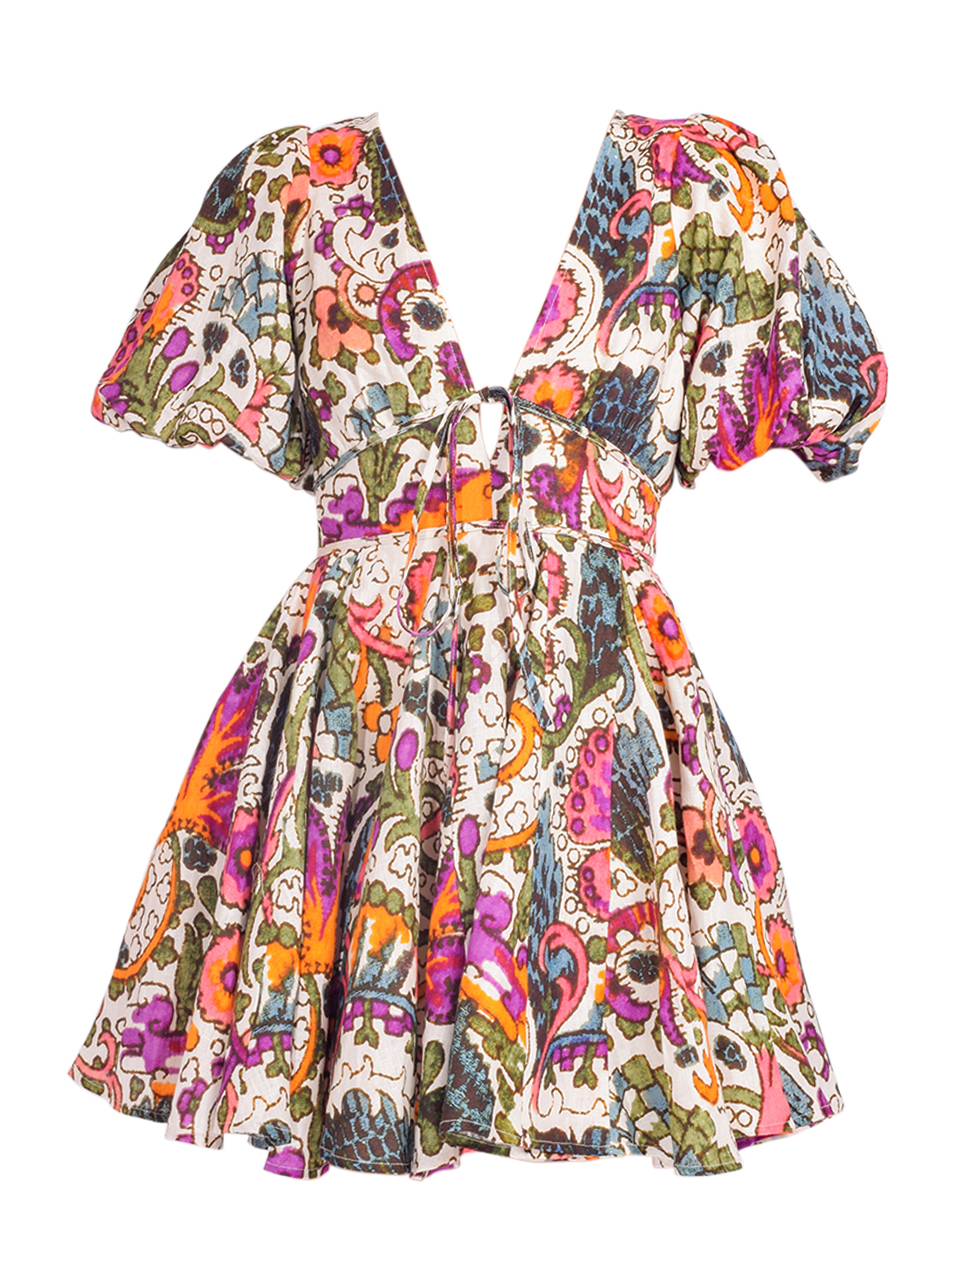 RHODE Madeline Dress in Lamu Grande Product Shot 